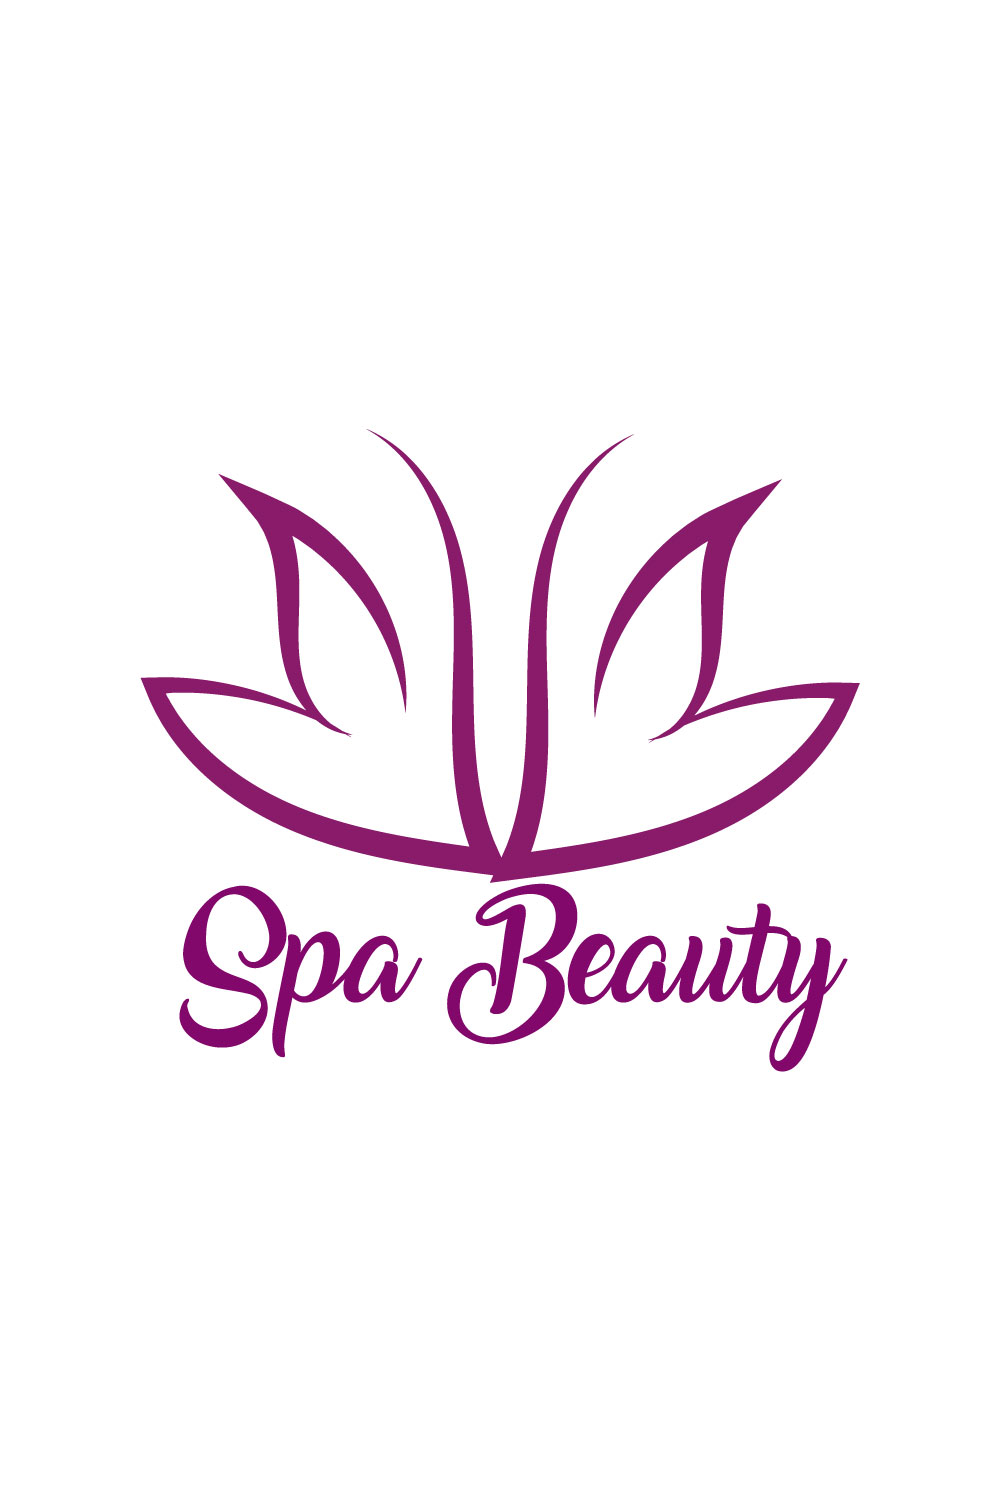 Free Spa Beauty logo pinterest preview image.